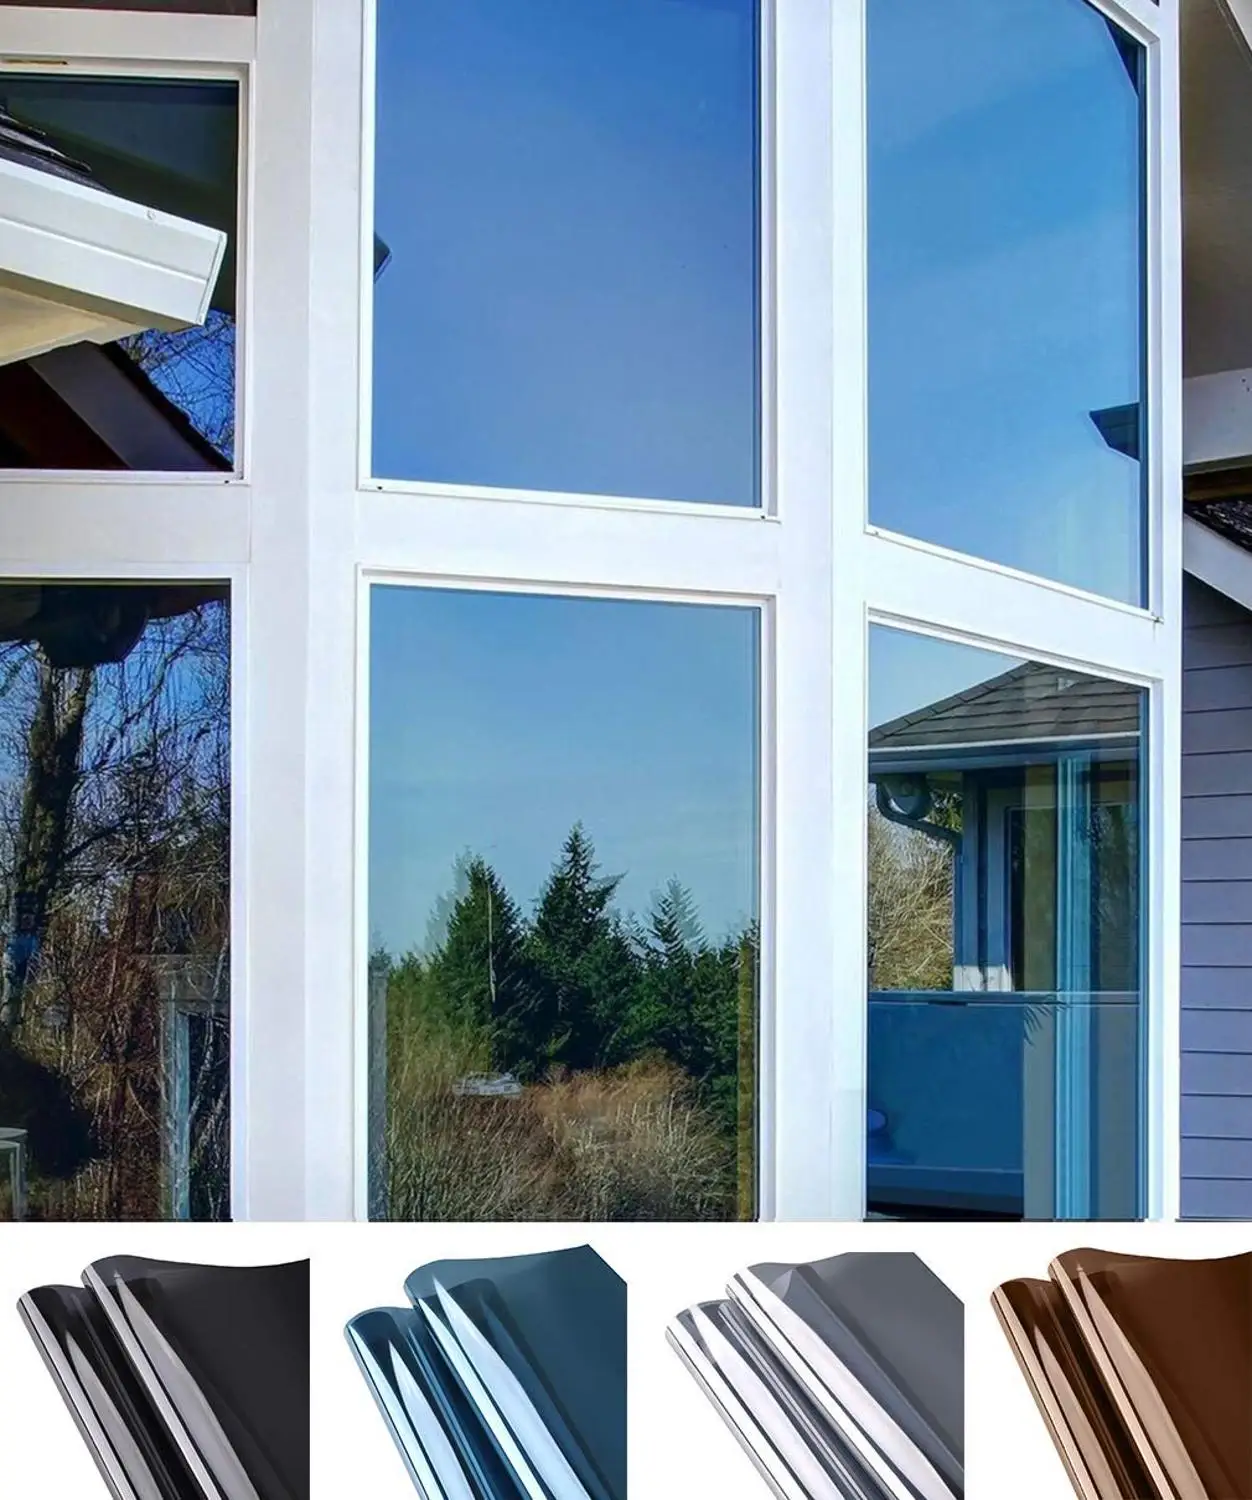 60" x10' Home Window Tint Silver/Black Film Crome Mirror Stop Heat 2ply 05% Dark 